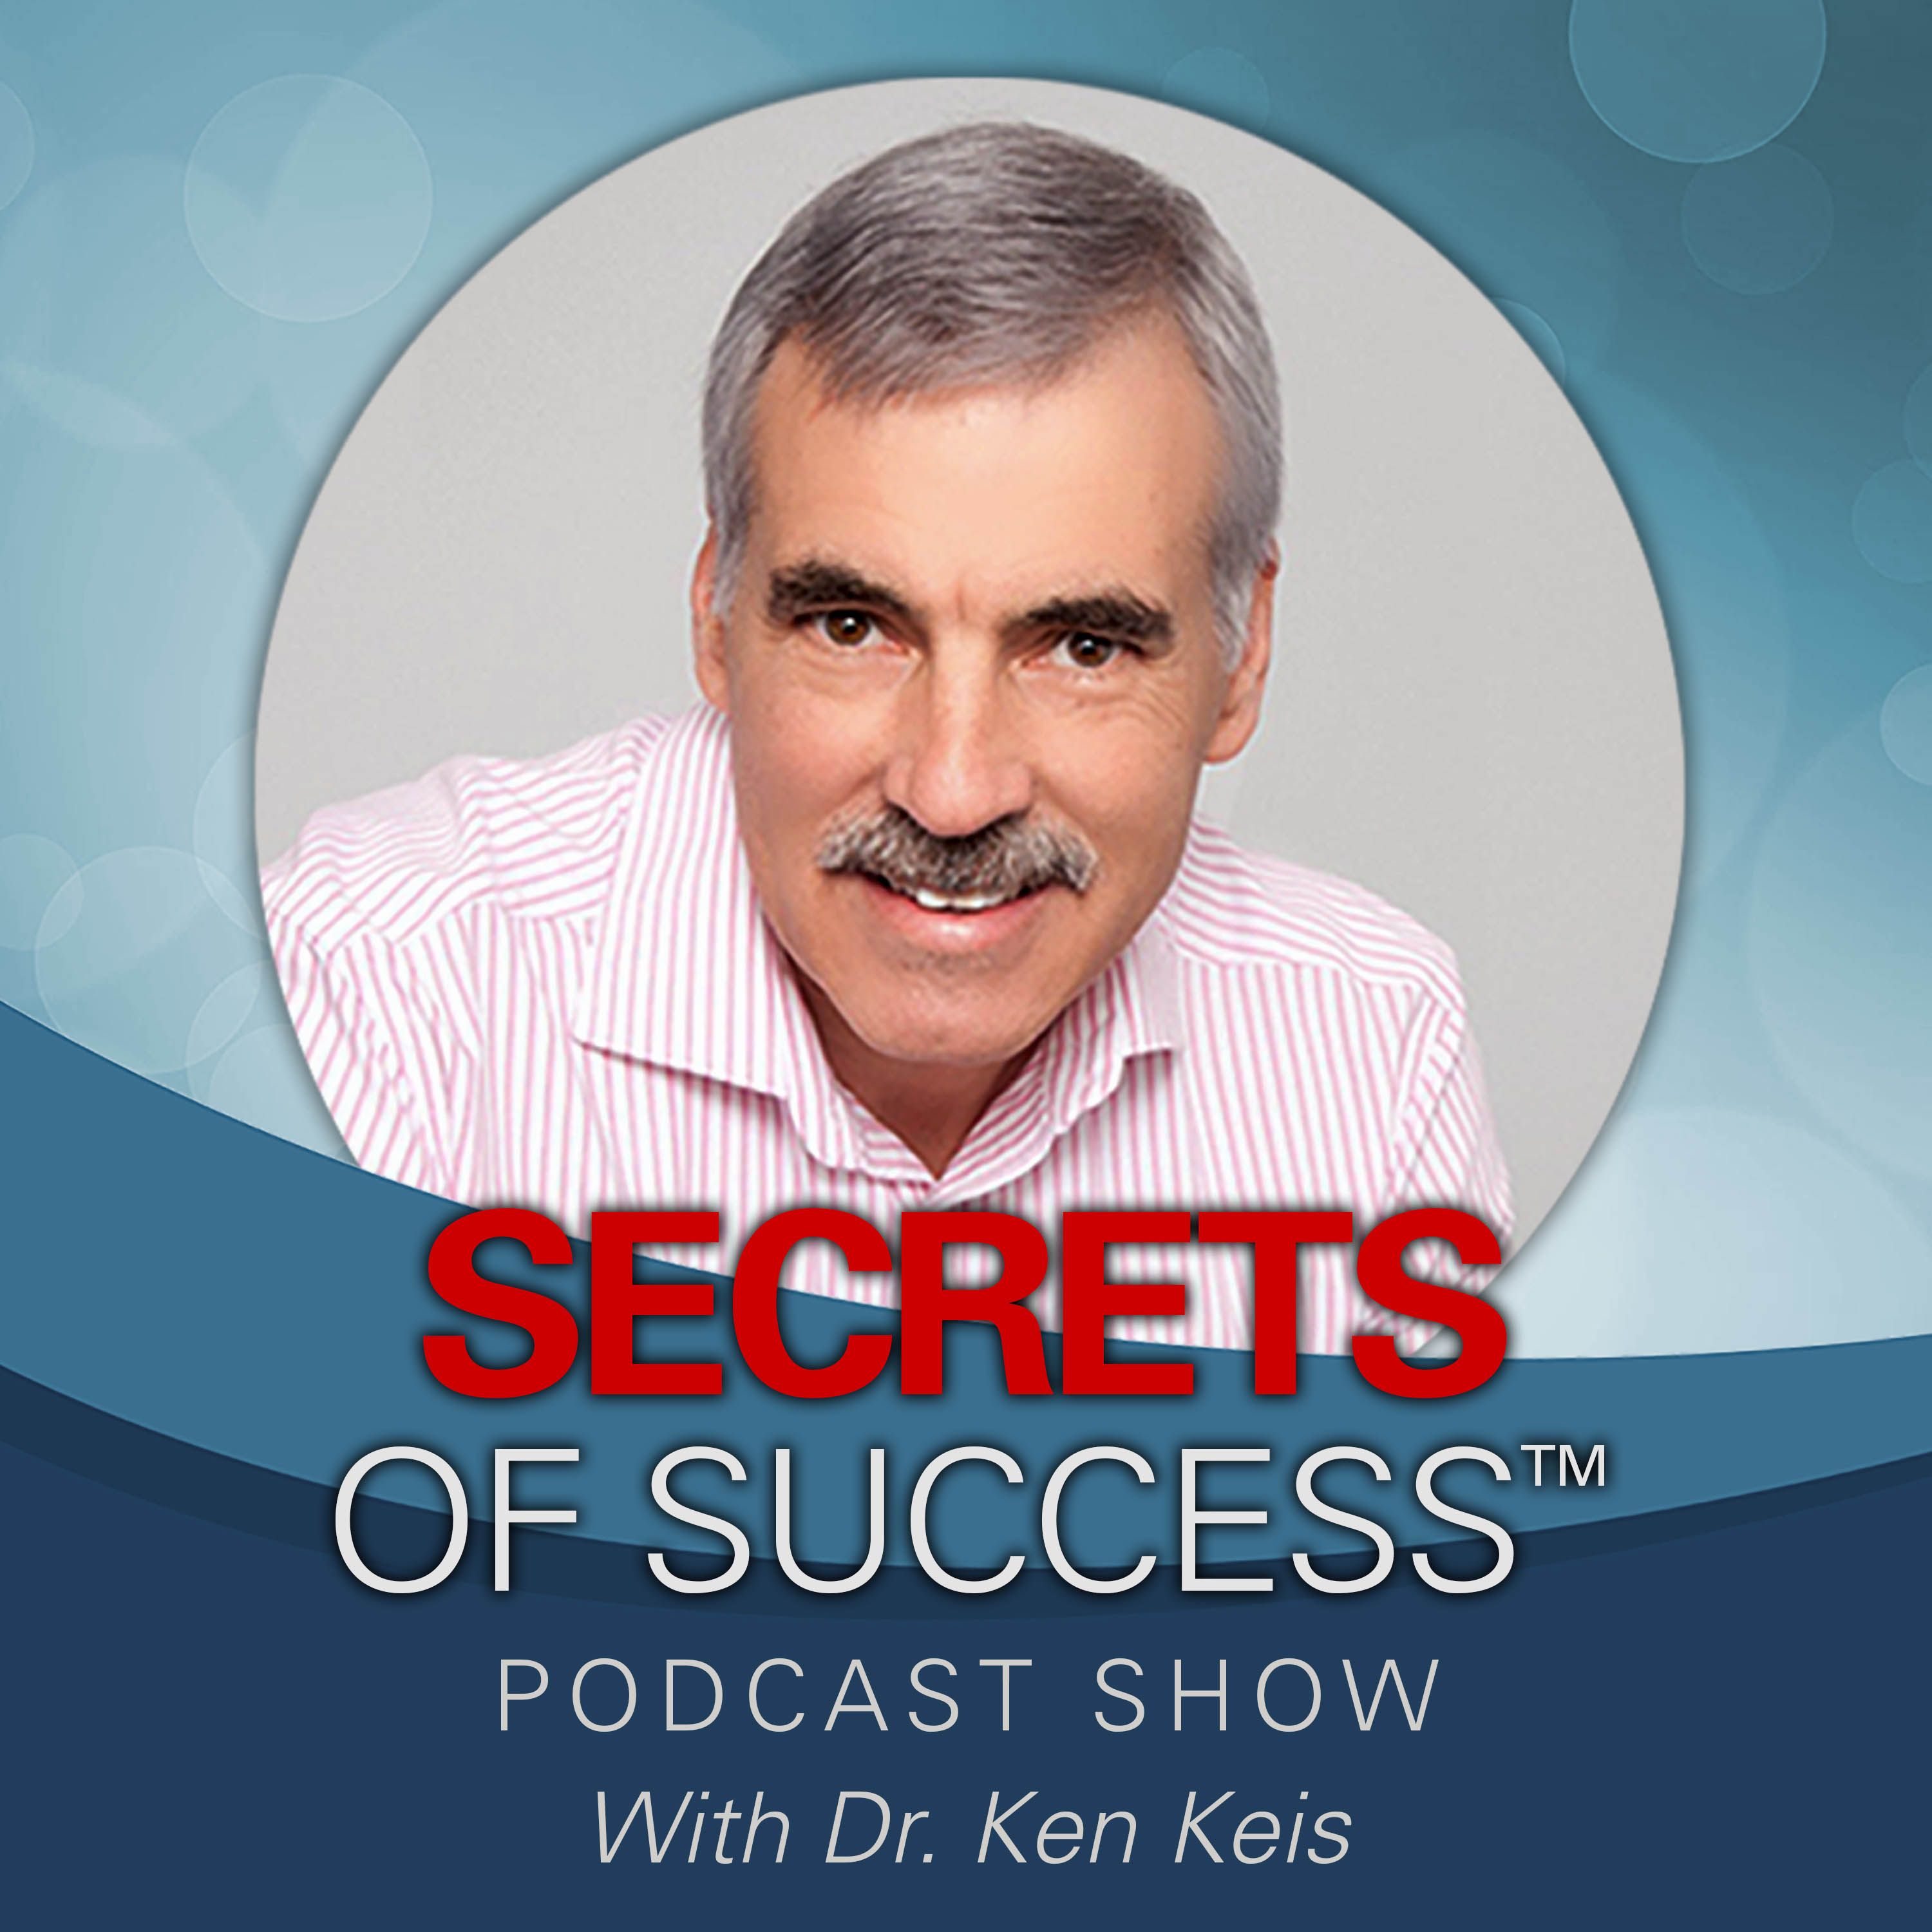 Artwork for podcast Secrets of Success